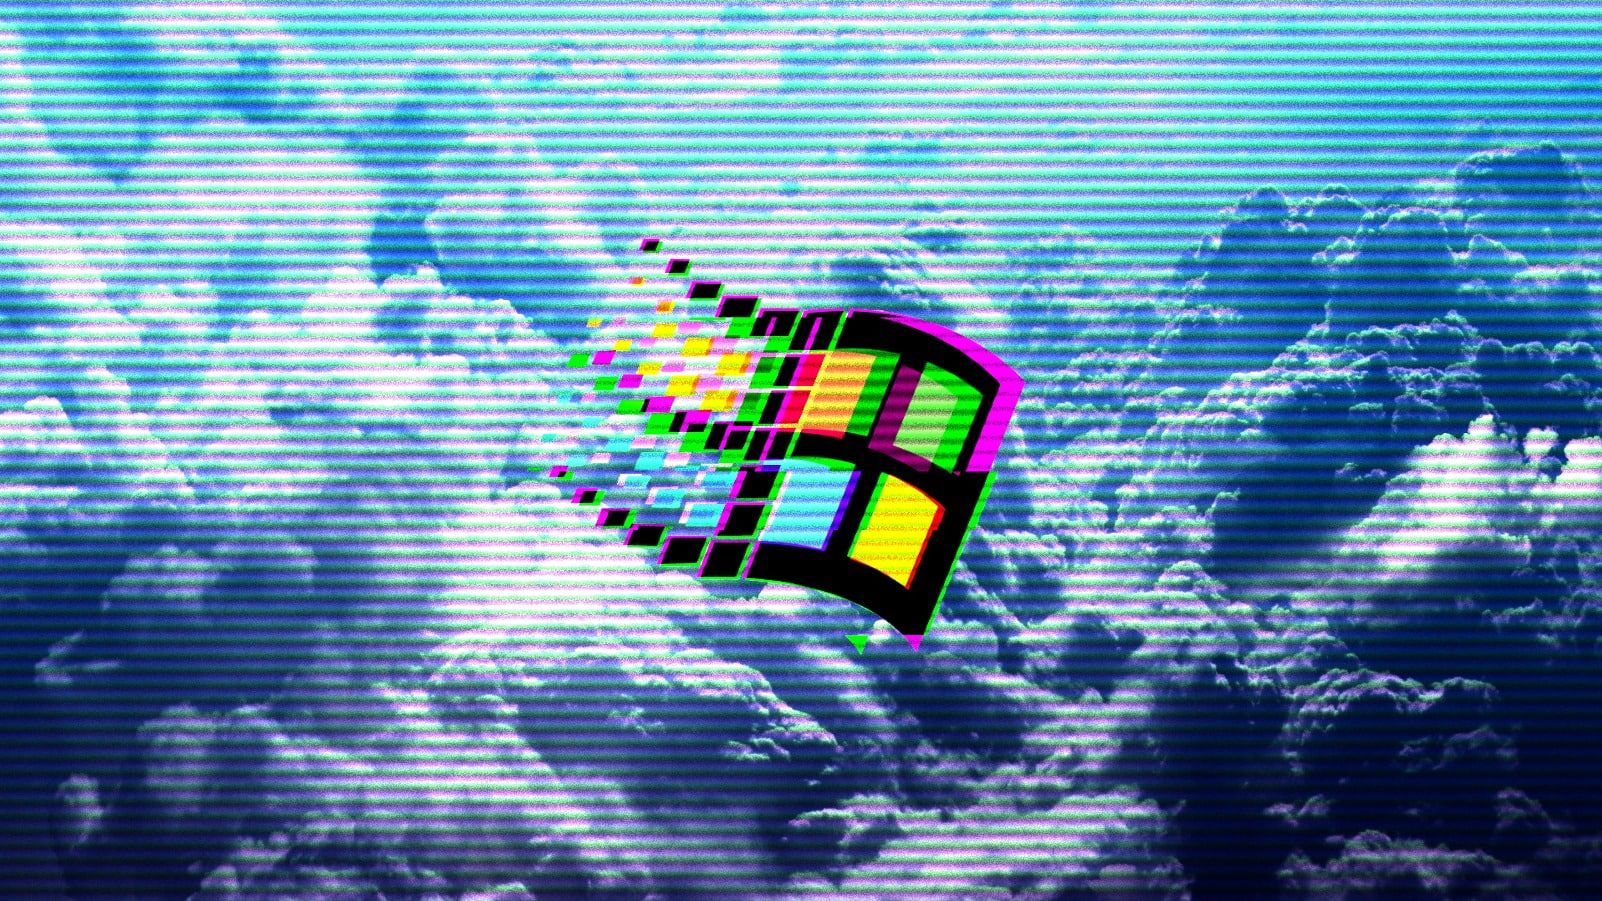 vaporwave s Windows 95 Windows 98 #clouds P #wallpaper #hdwallpaper #desktop. Vaporwave wallpaper, HD wallpaper, Vaporwave